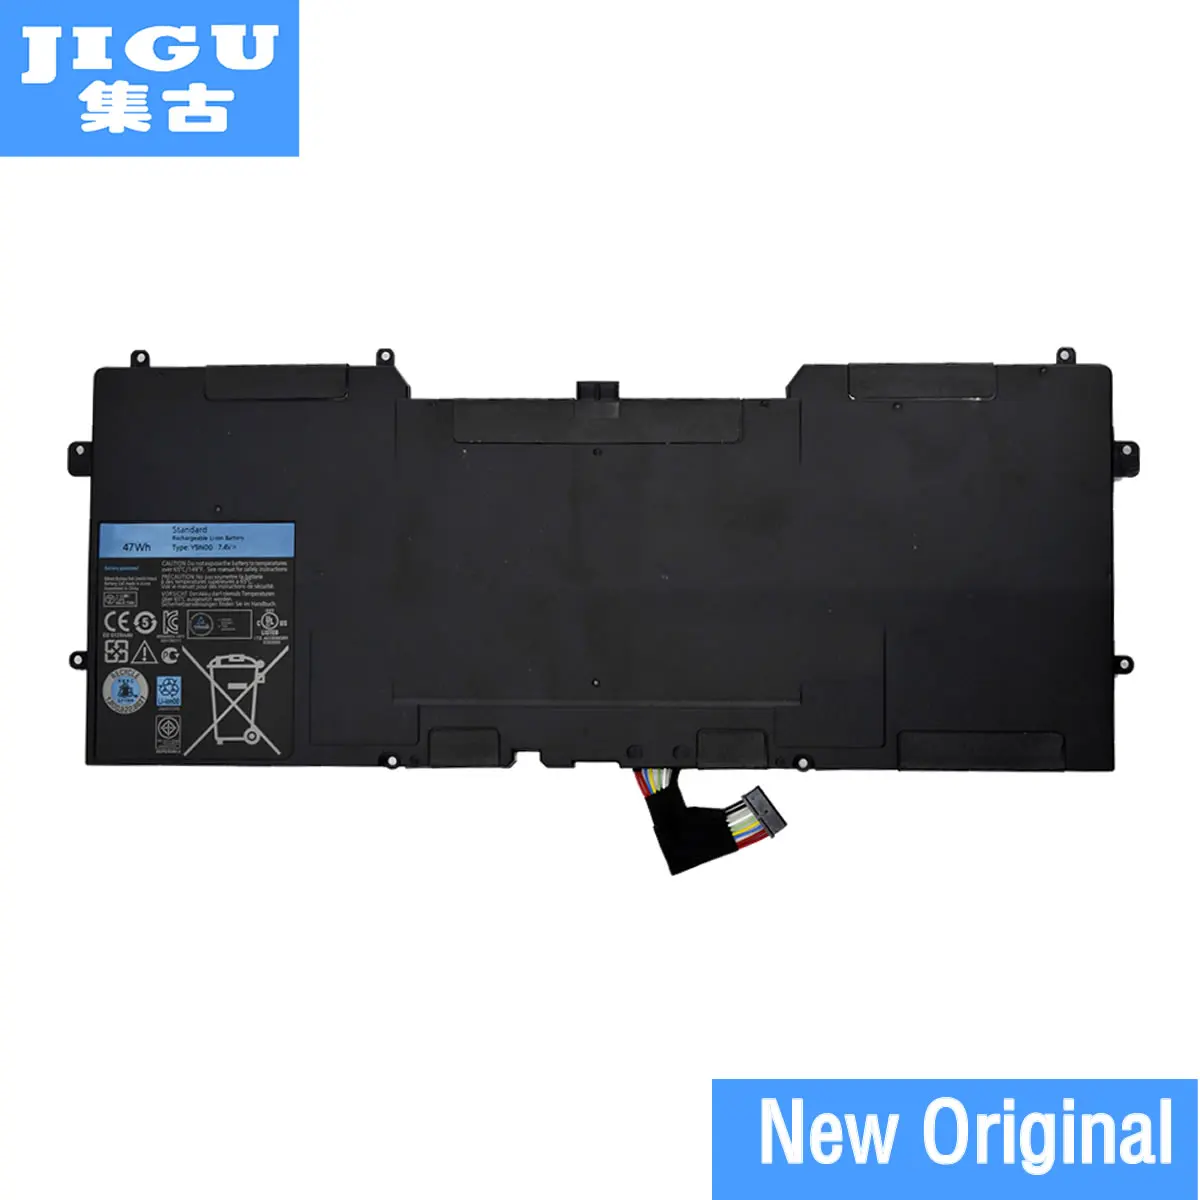 

JIGU Y9N00 ORIGINAL Laptop Battery For DELL XPS 13 L321X 13-L321X L321X 13-L322X 12 12d 9Q33 13 Ultrabook Series